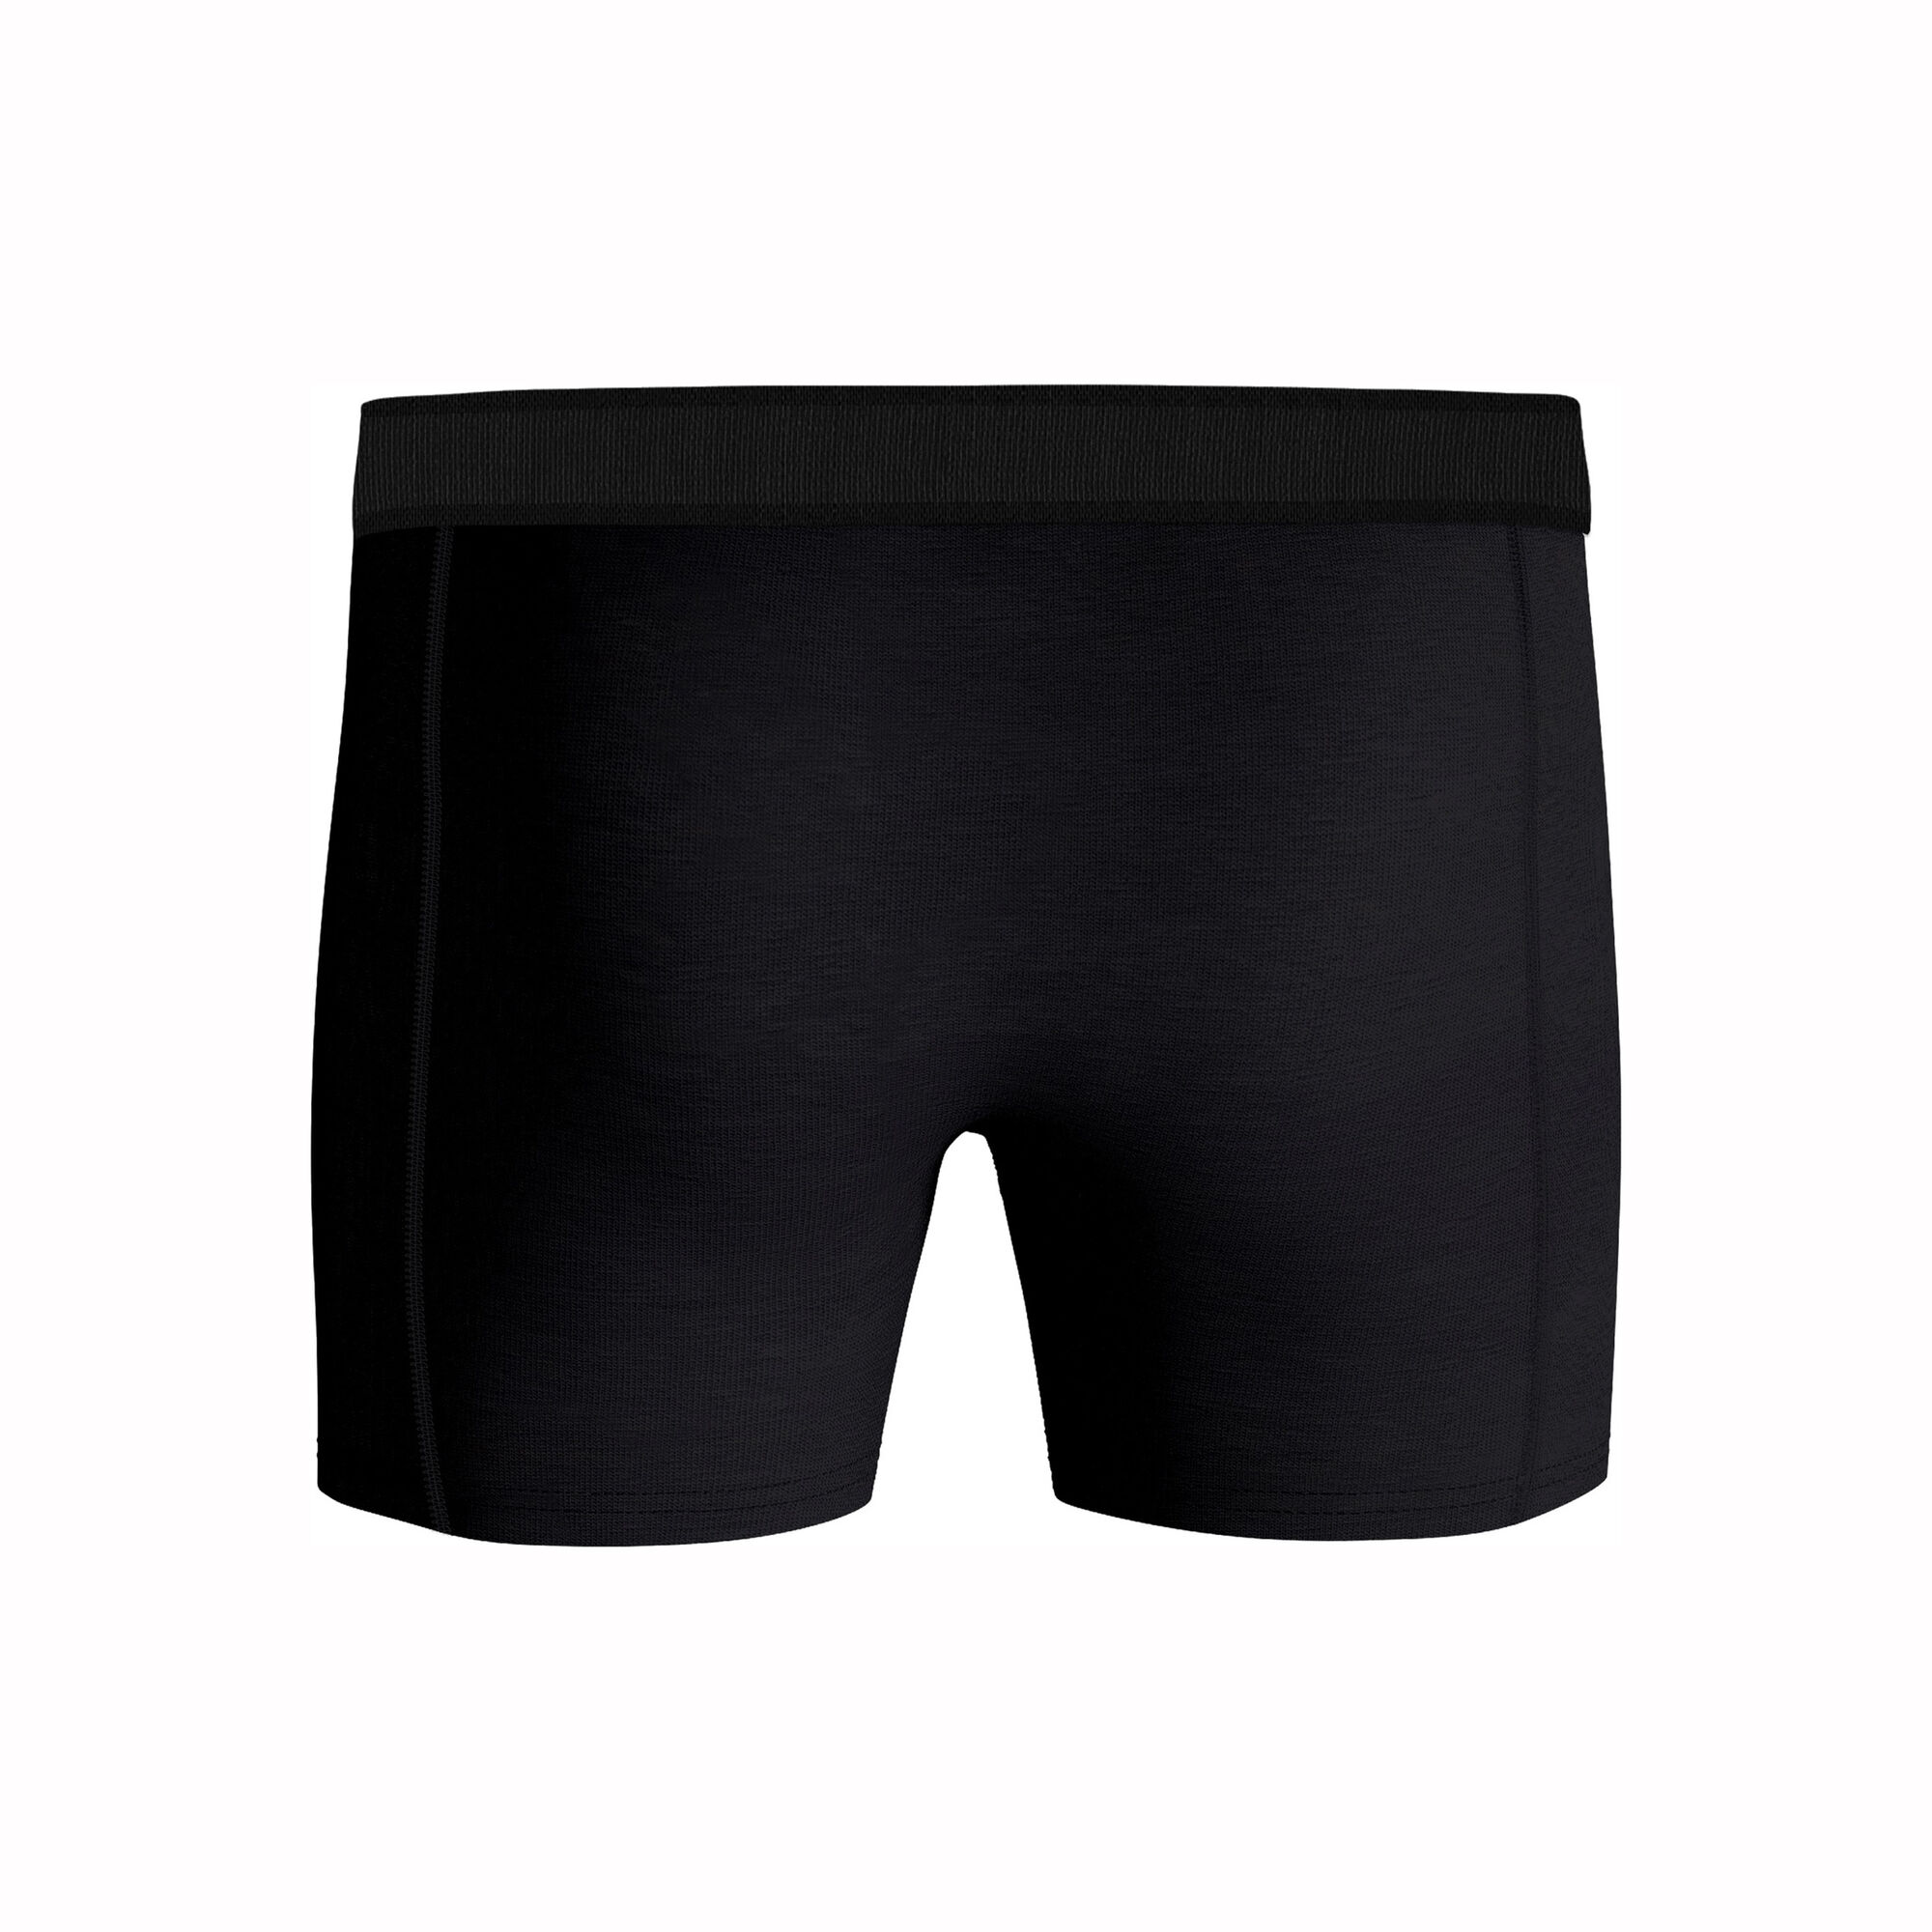 Buy Björn Borg Premium Cotton Stretch Boxer Shorts 2 Pack Men